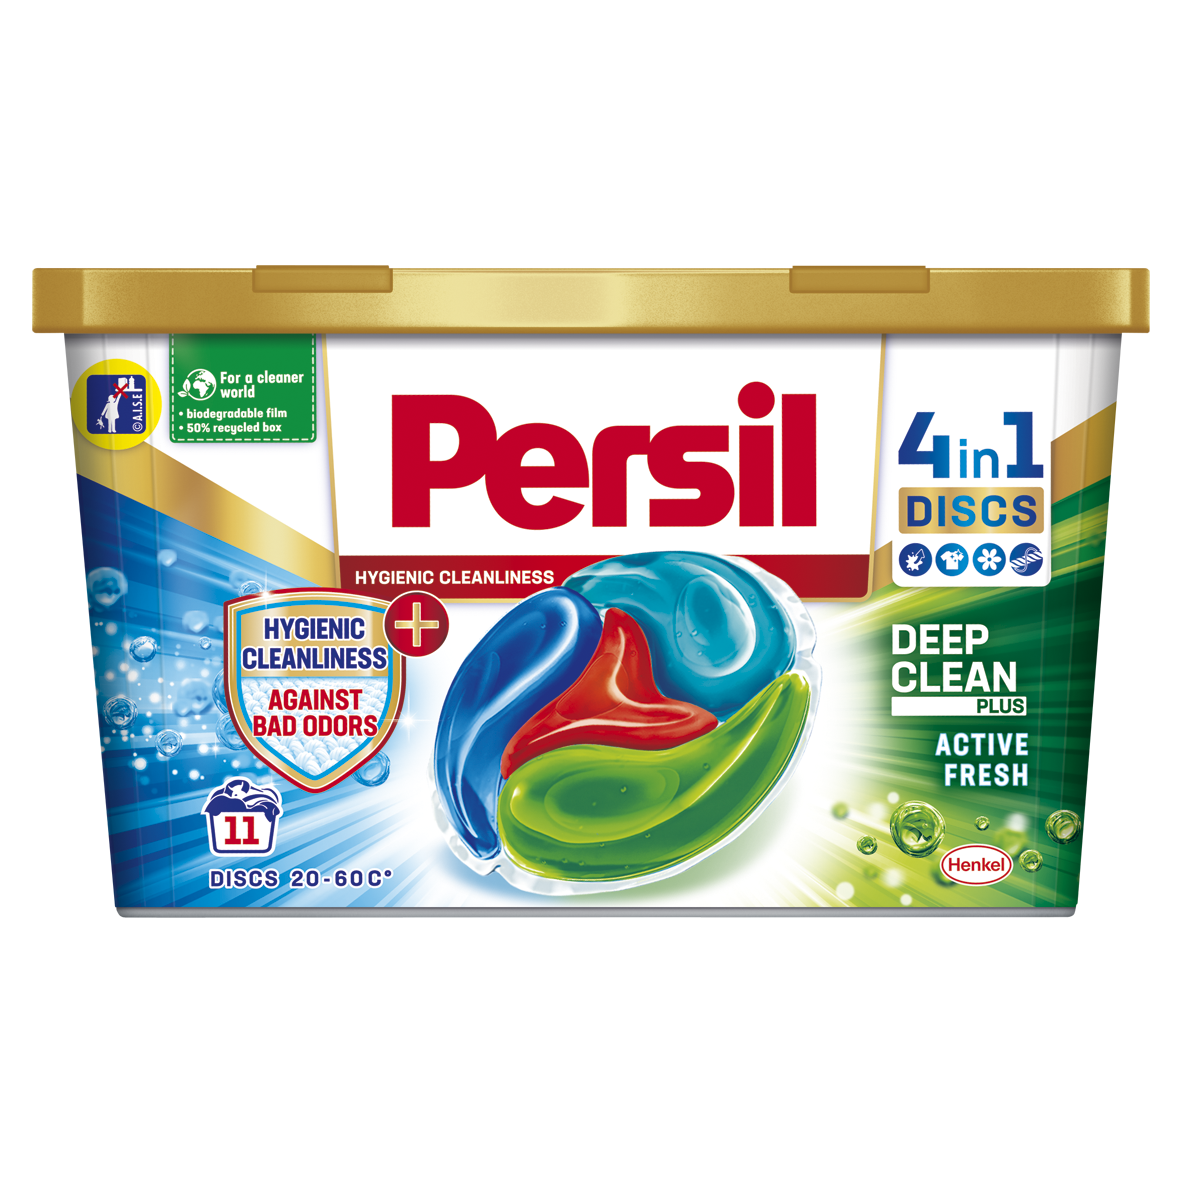 Detergent automat capsule Persil 4in1 Discs Hygienic Cleanliness, 11 spalari, 11 bucati